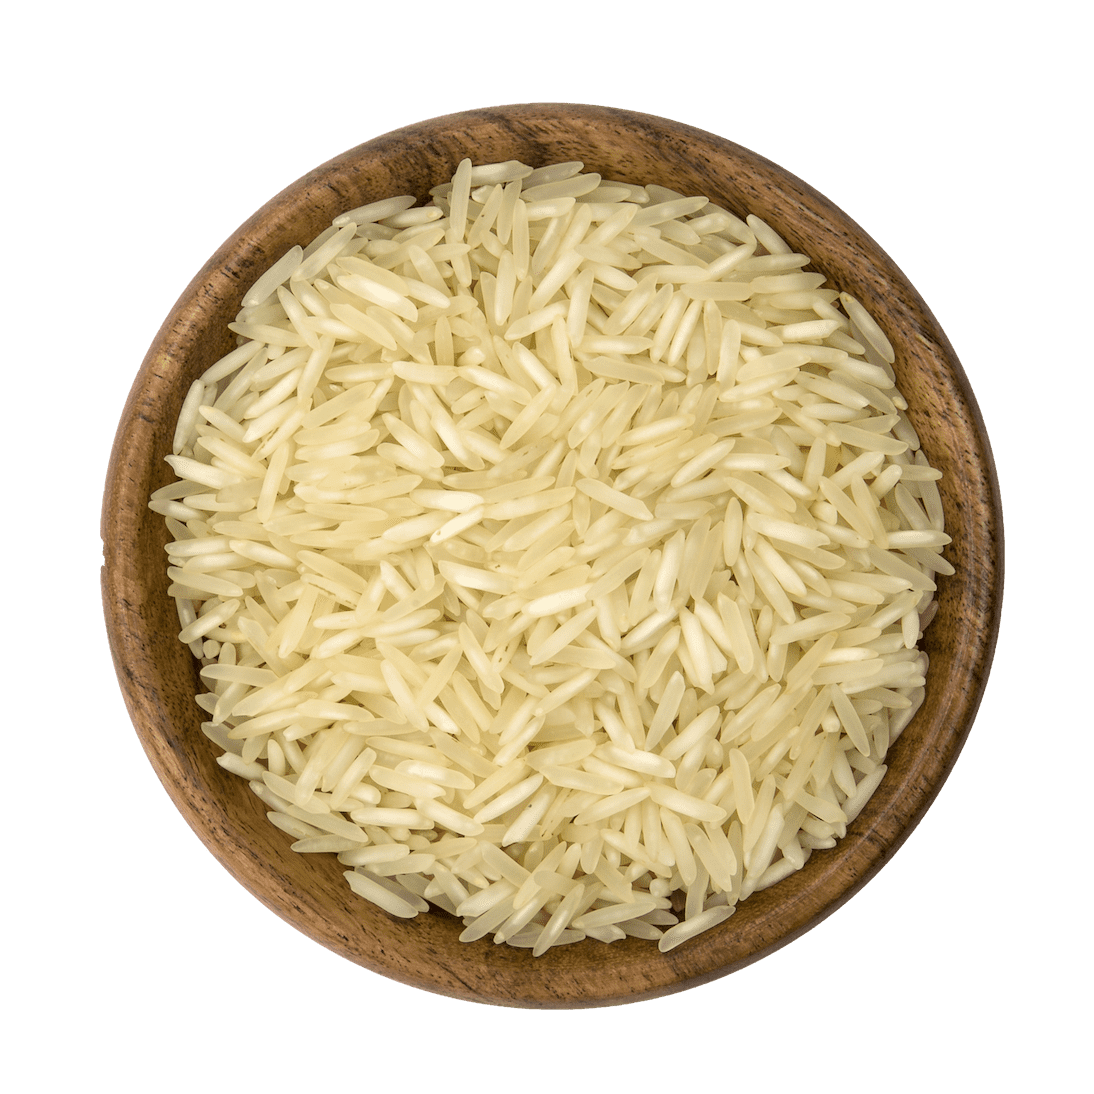 Sugandha Steam Rice in a bowl